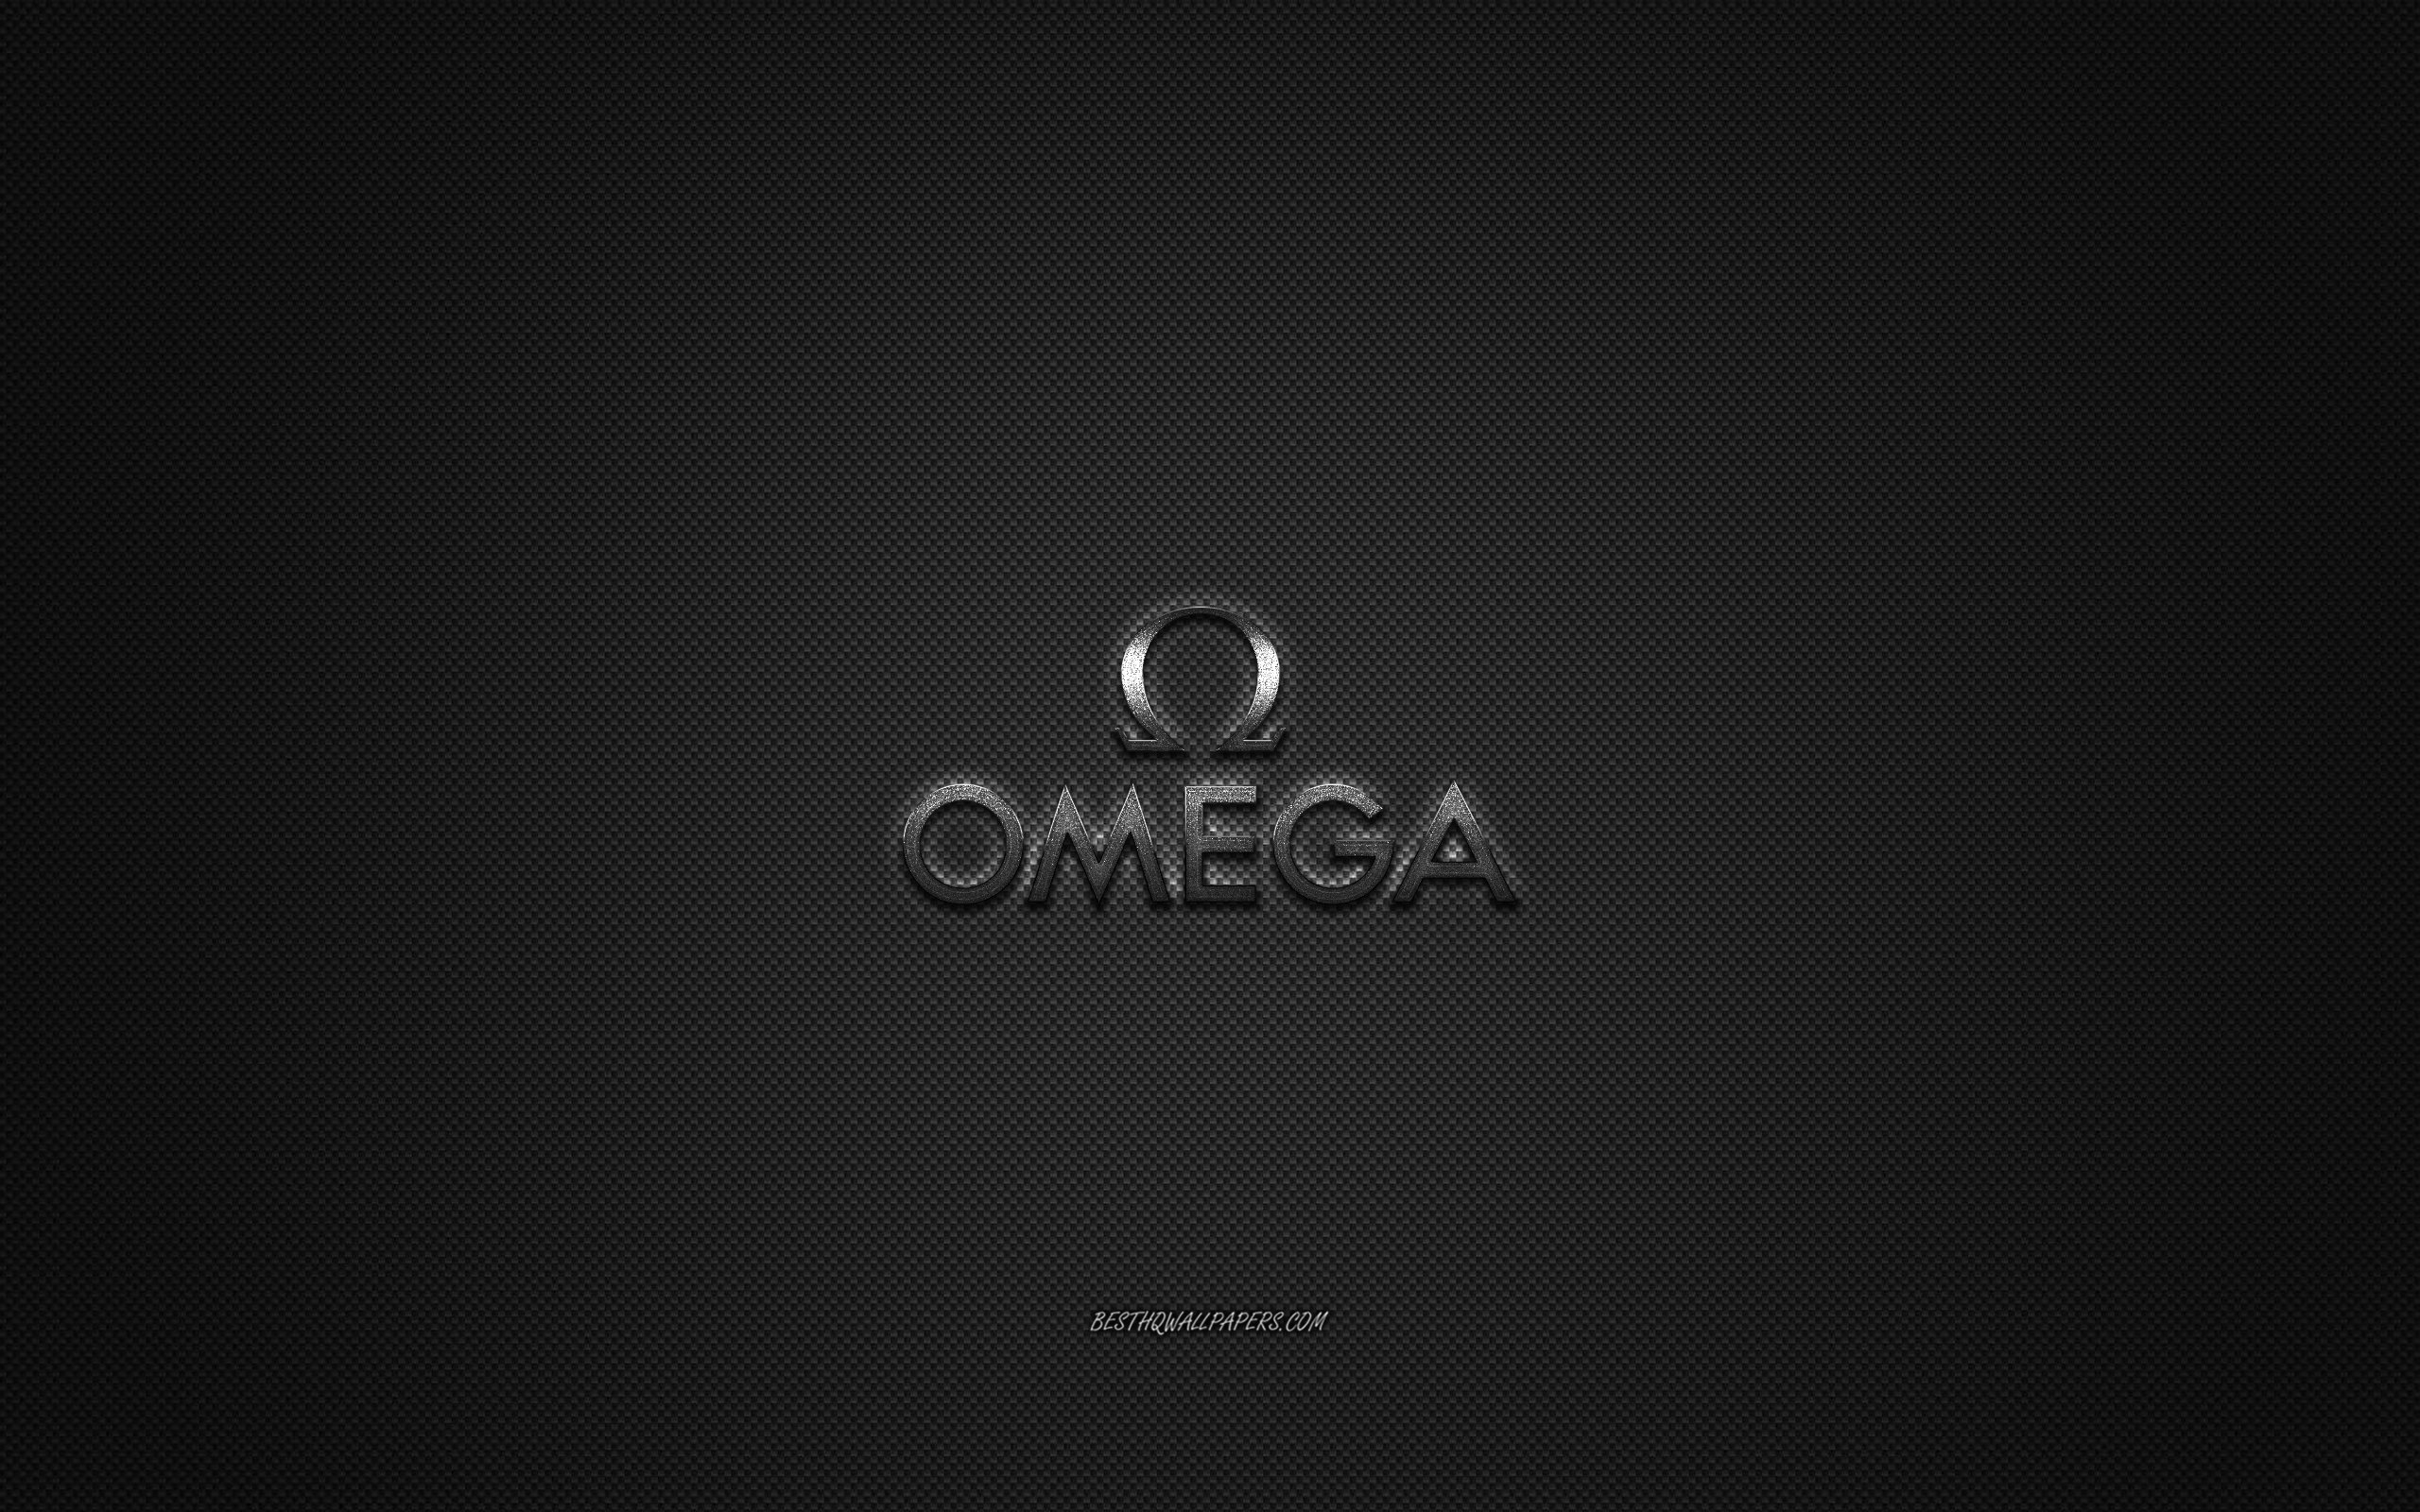 Download wallpaper Omega logo, metal emblem, apparel brand, black carbon texture, global apparel brands, Omega, fashion concept, Omega emblem for desktop with resolution 2560x1600. High Quality HD picture wallpaper